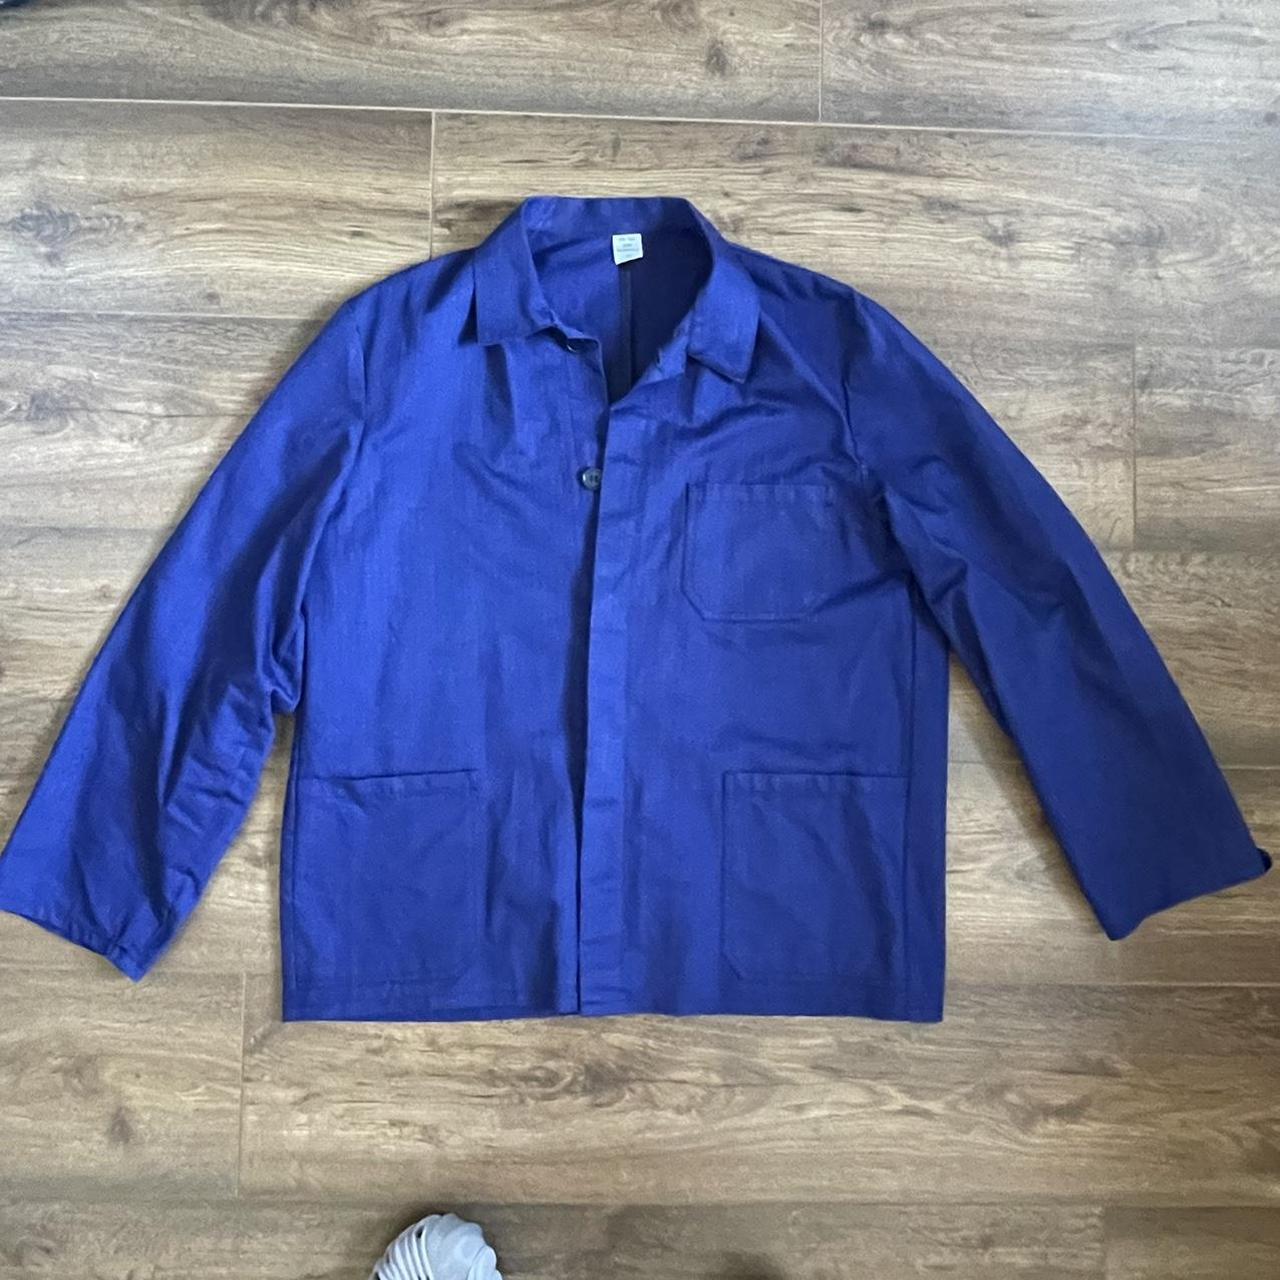 Vintage French chore jacket •Size 52 (fits like a... - Depop